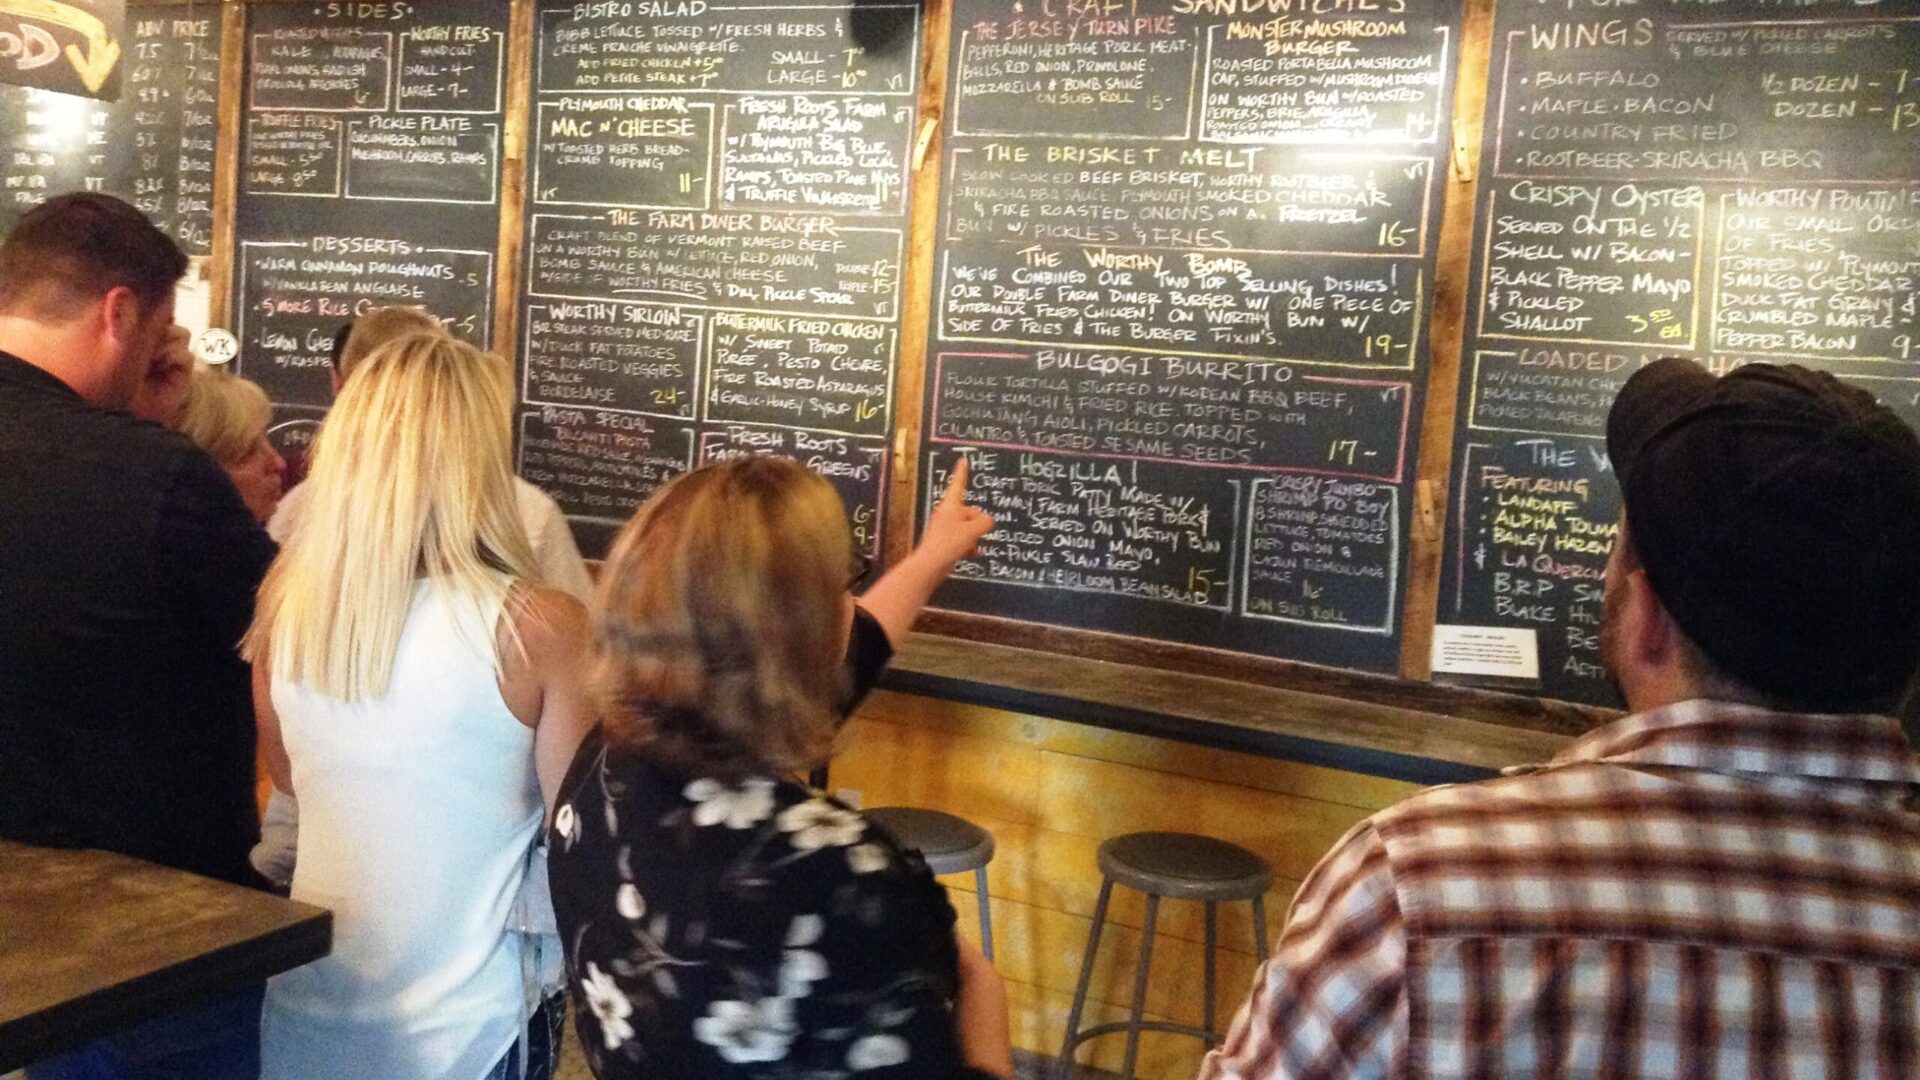 Worthy Kitchen chalkboard menu|two glasses of beer - one light